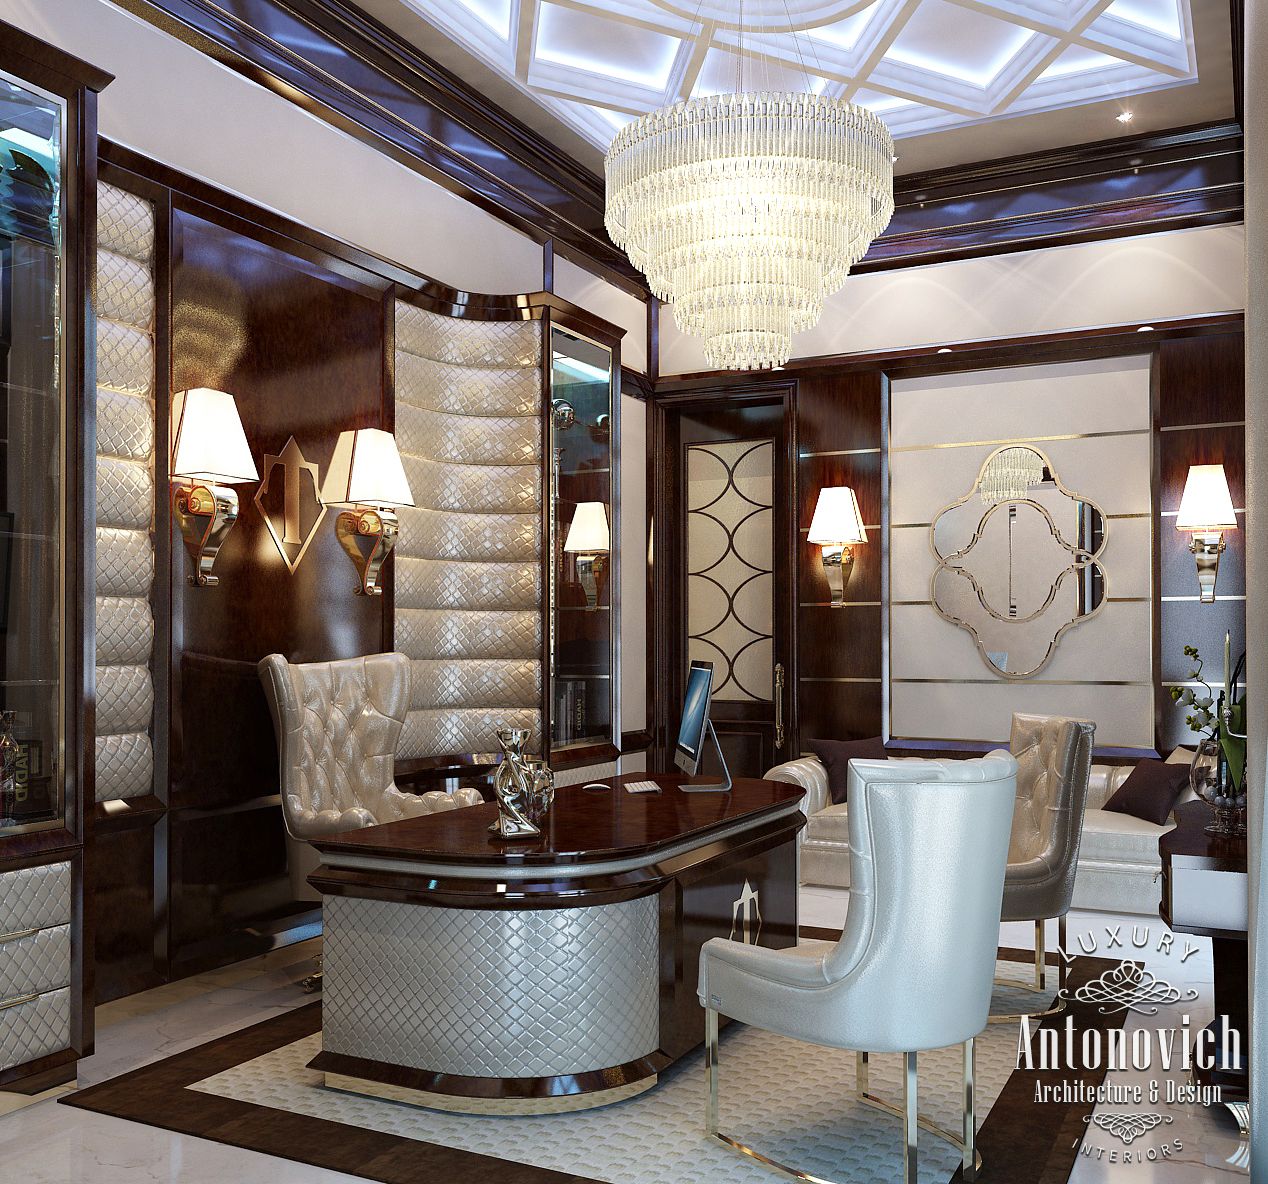  LUXURY  ANTONOVICH DESIGN  UAE Office Interior from Luxury  